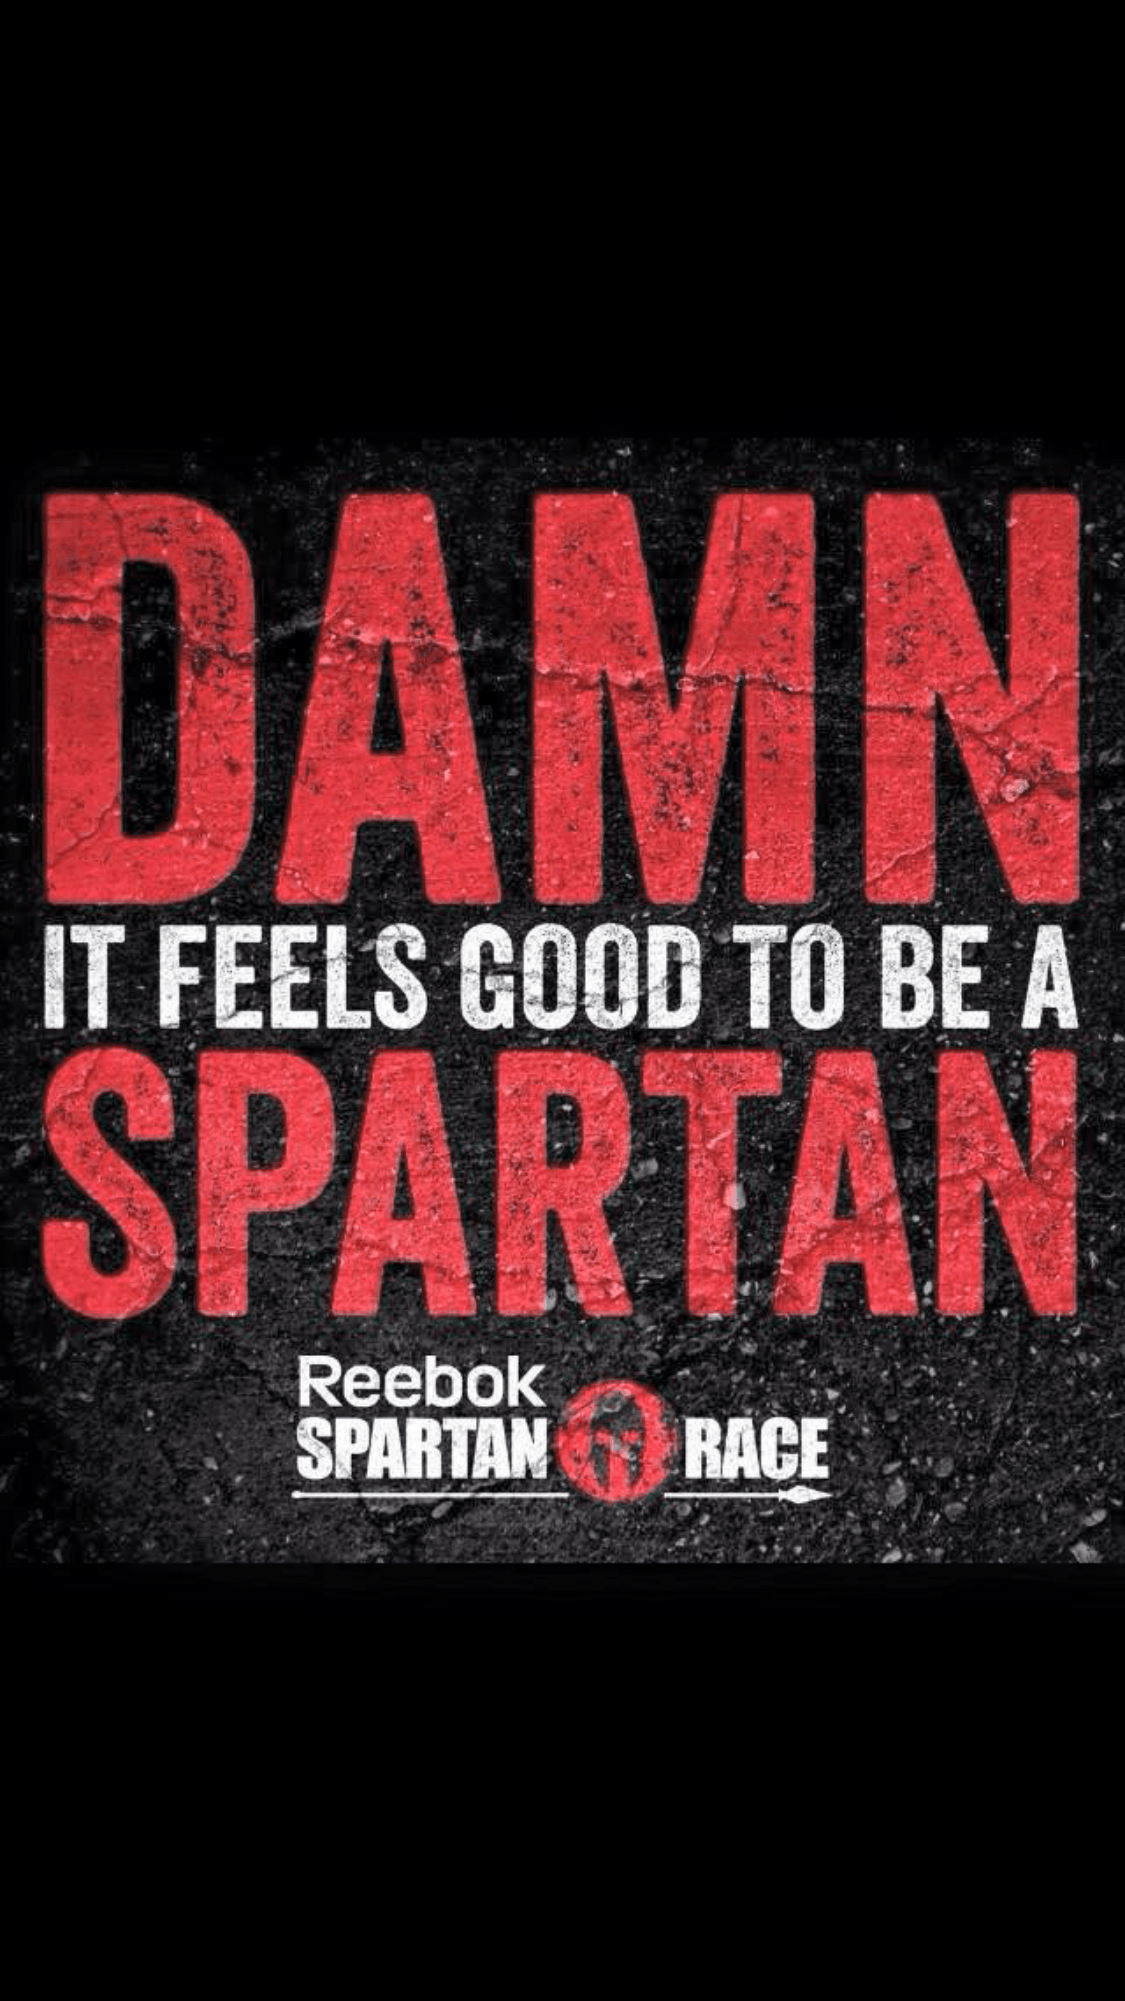 Spartan Race Wallpapers